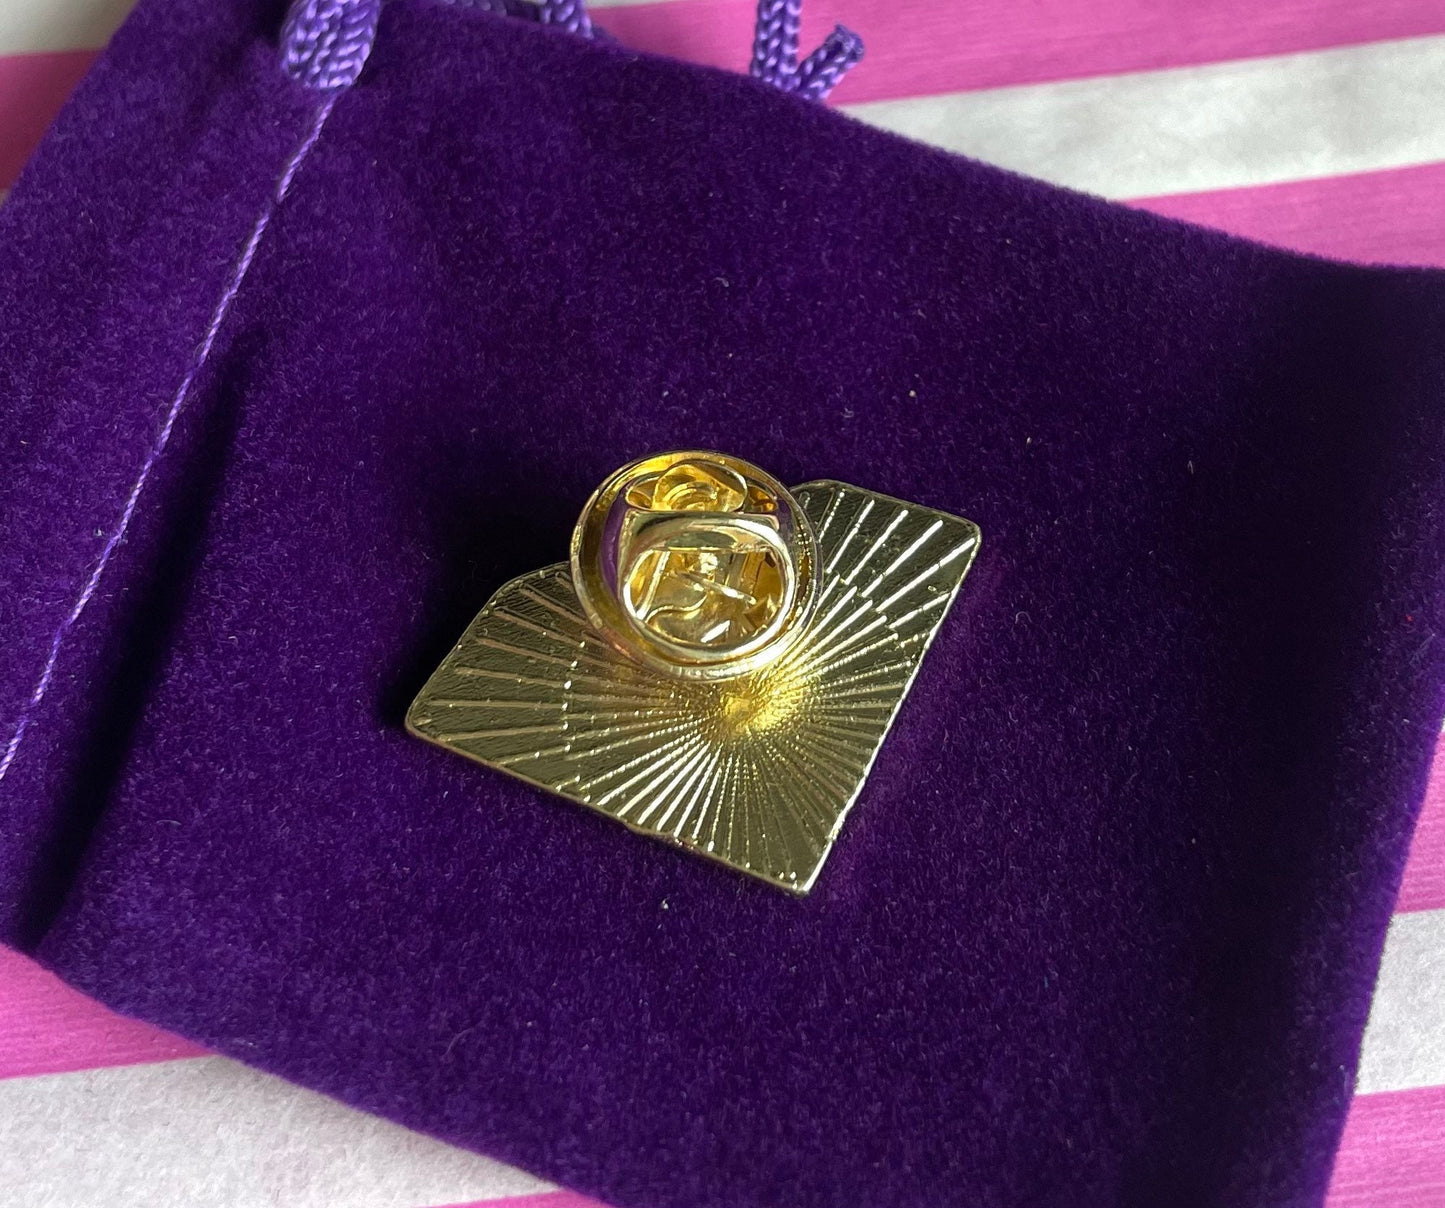 Diamond enamel pin badge, 30mm